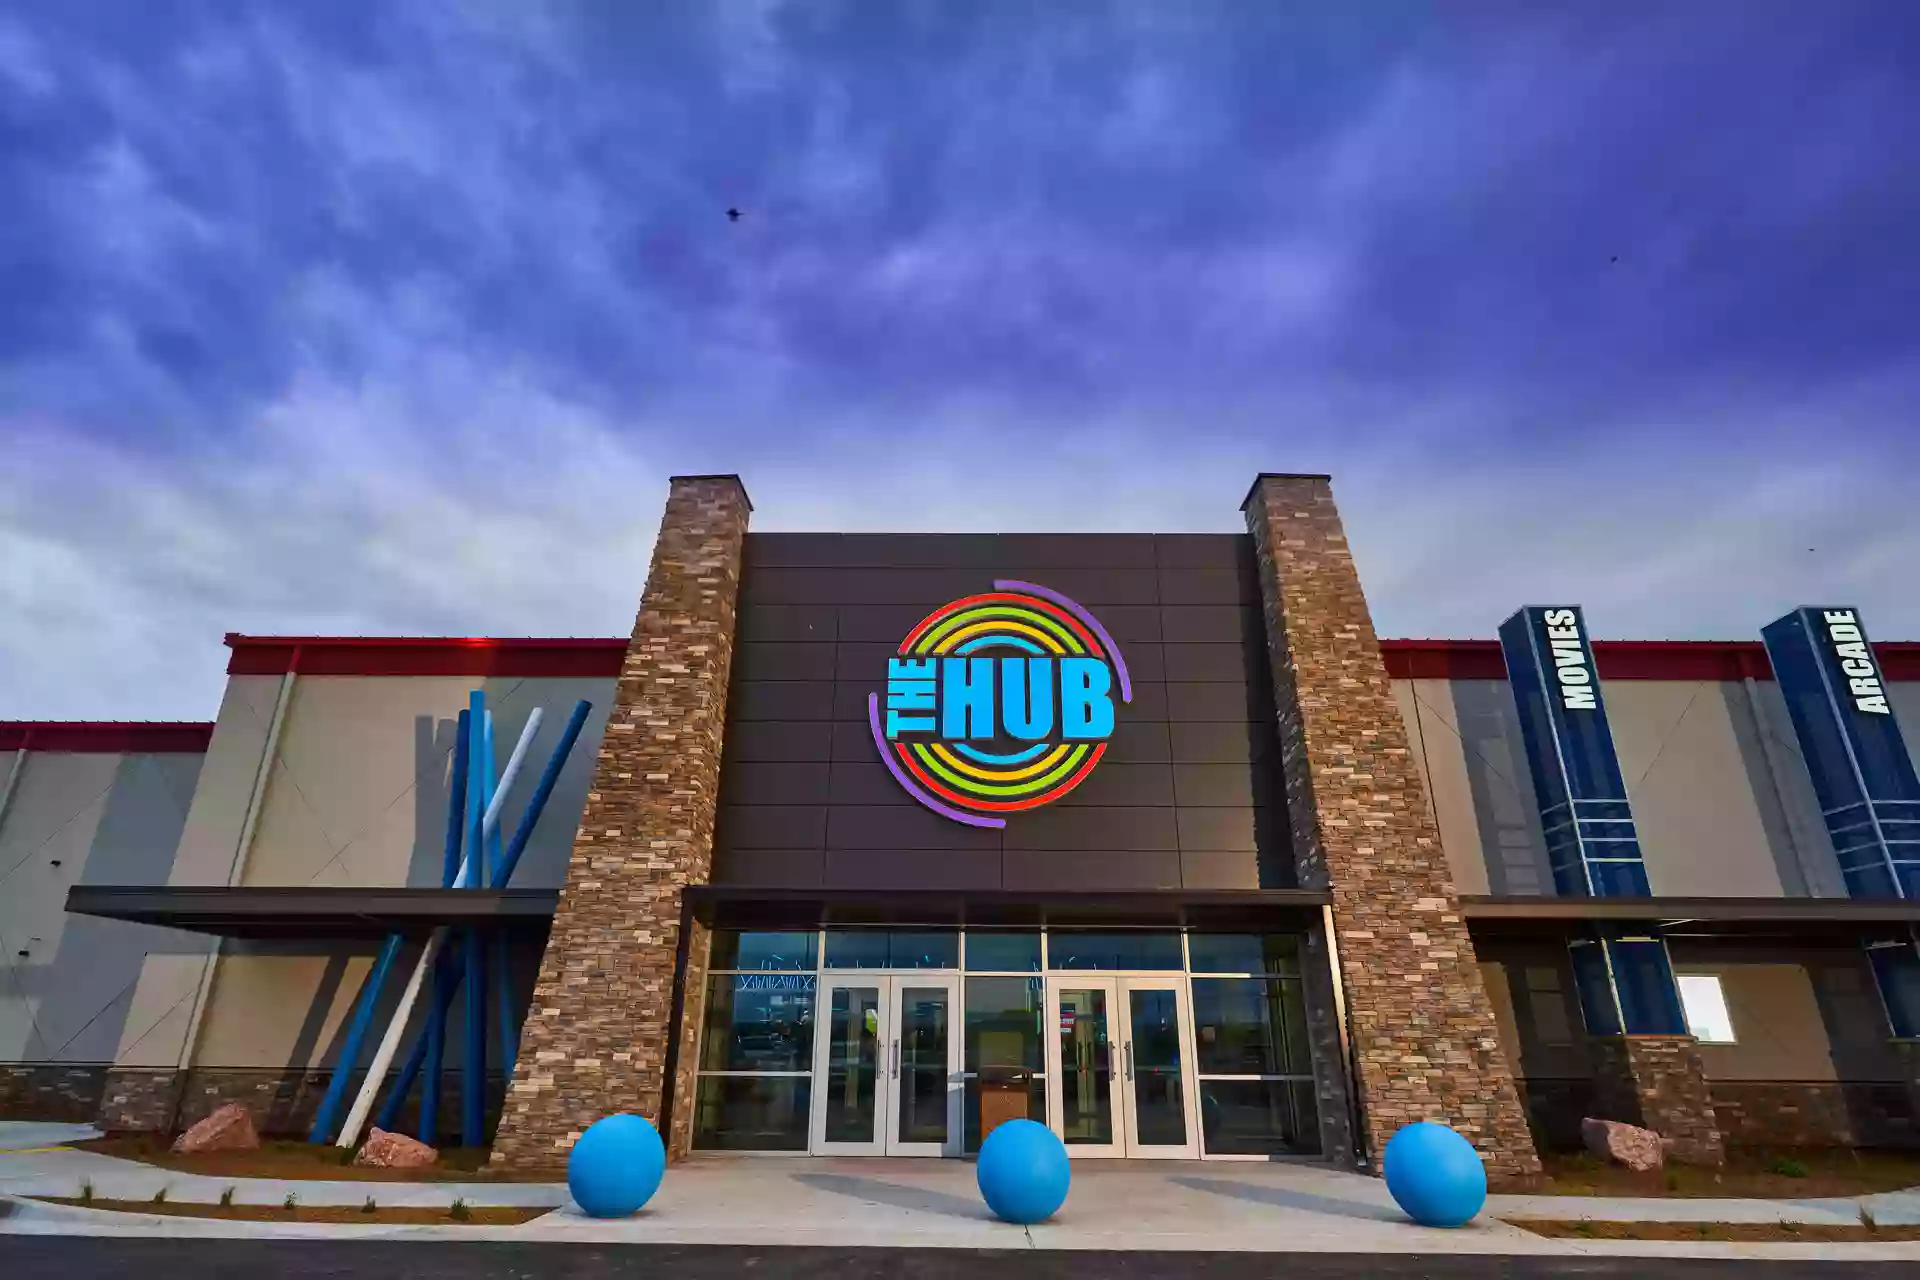 The HUB Entertainment Center